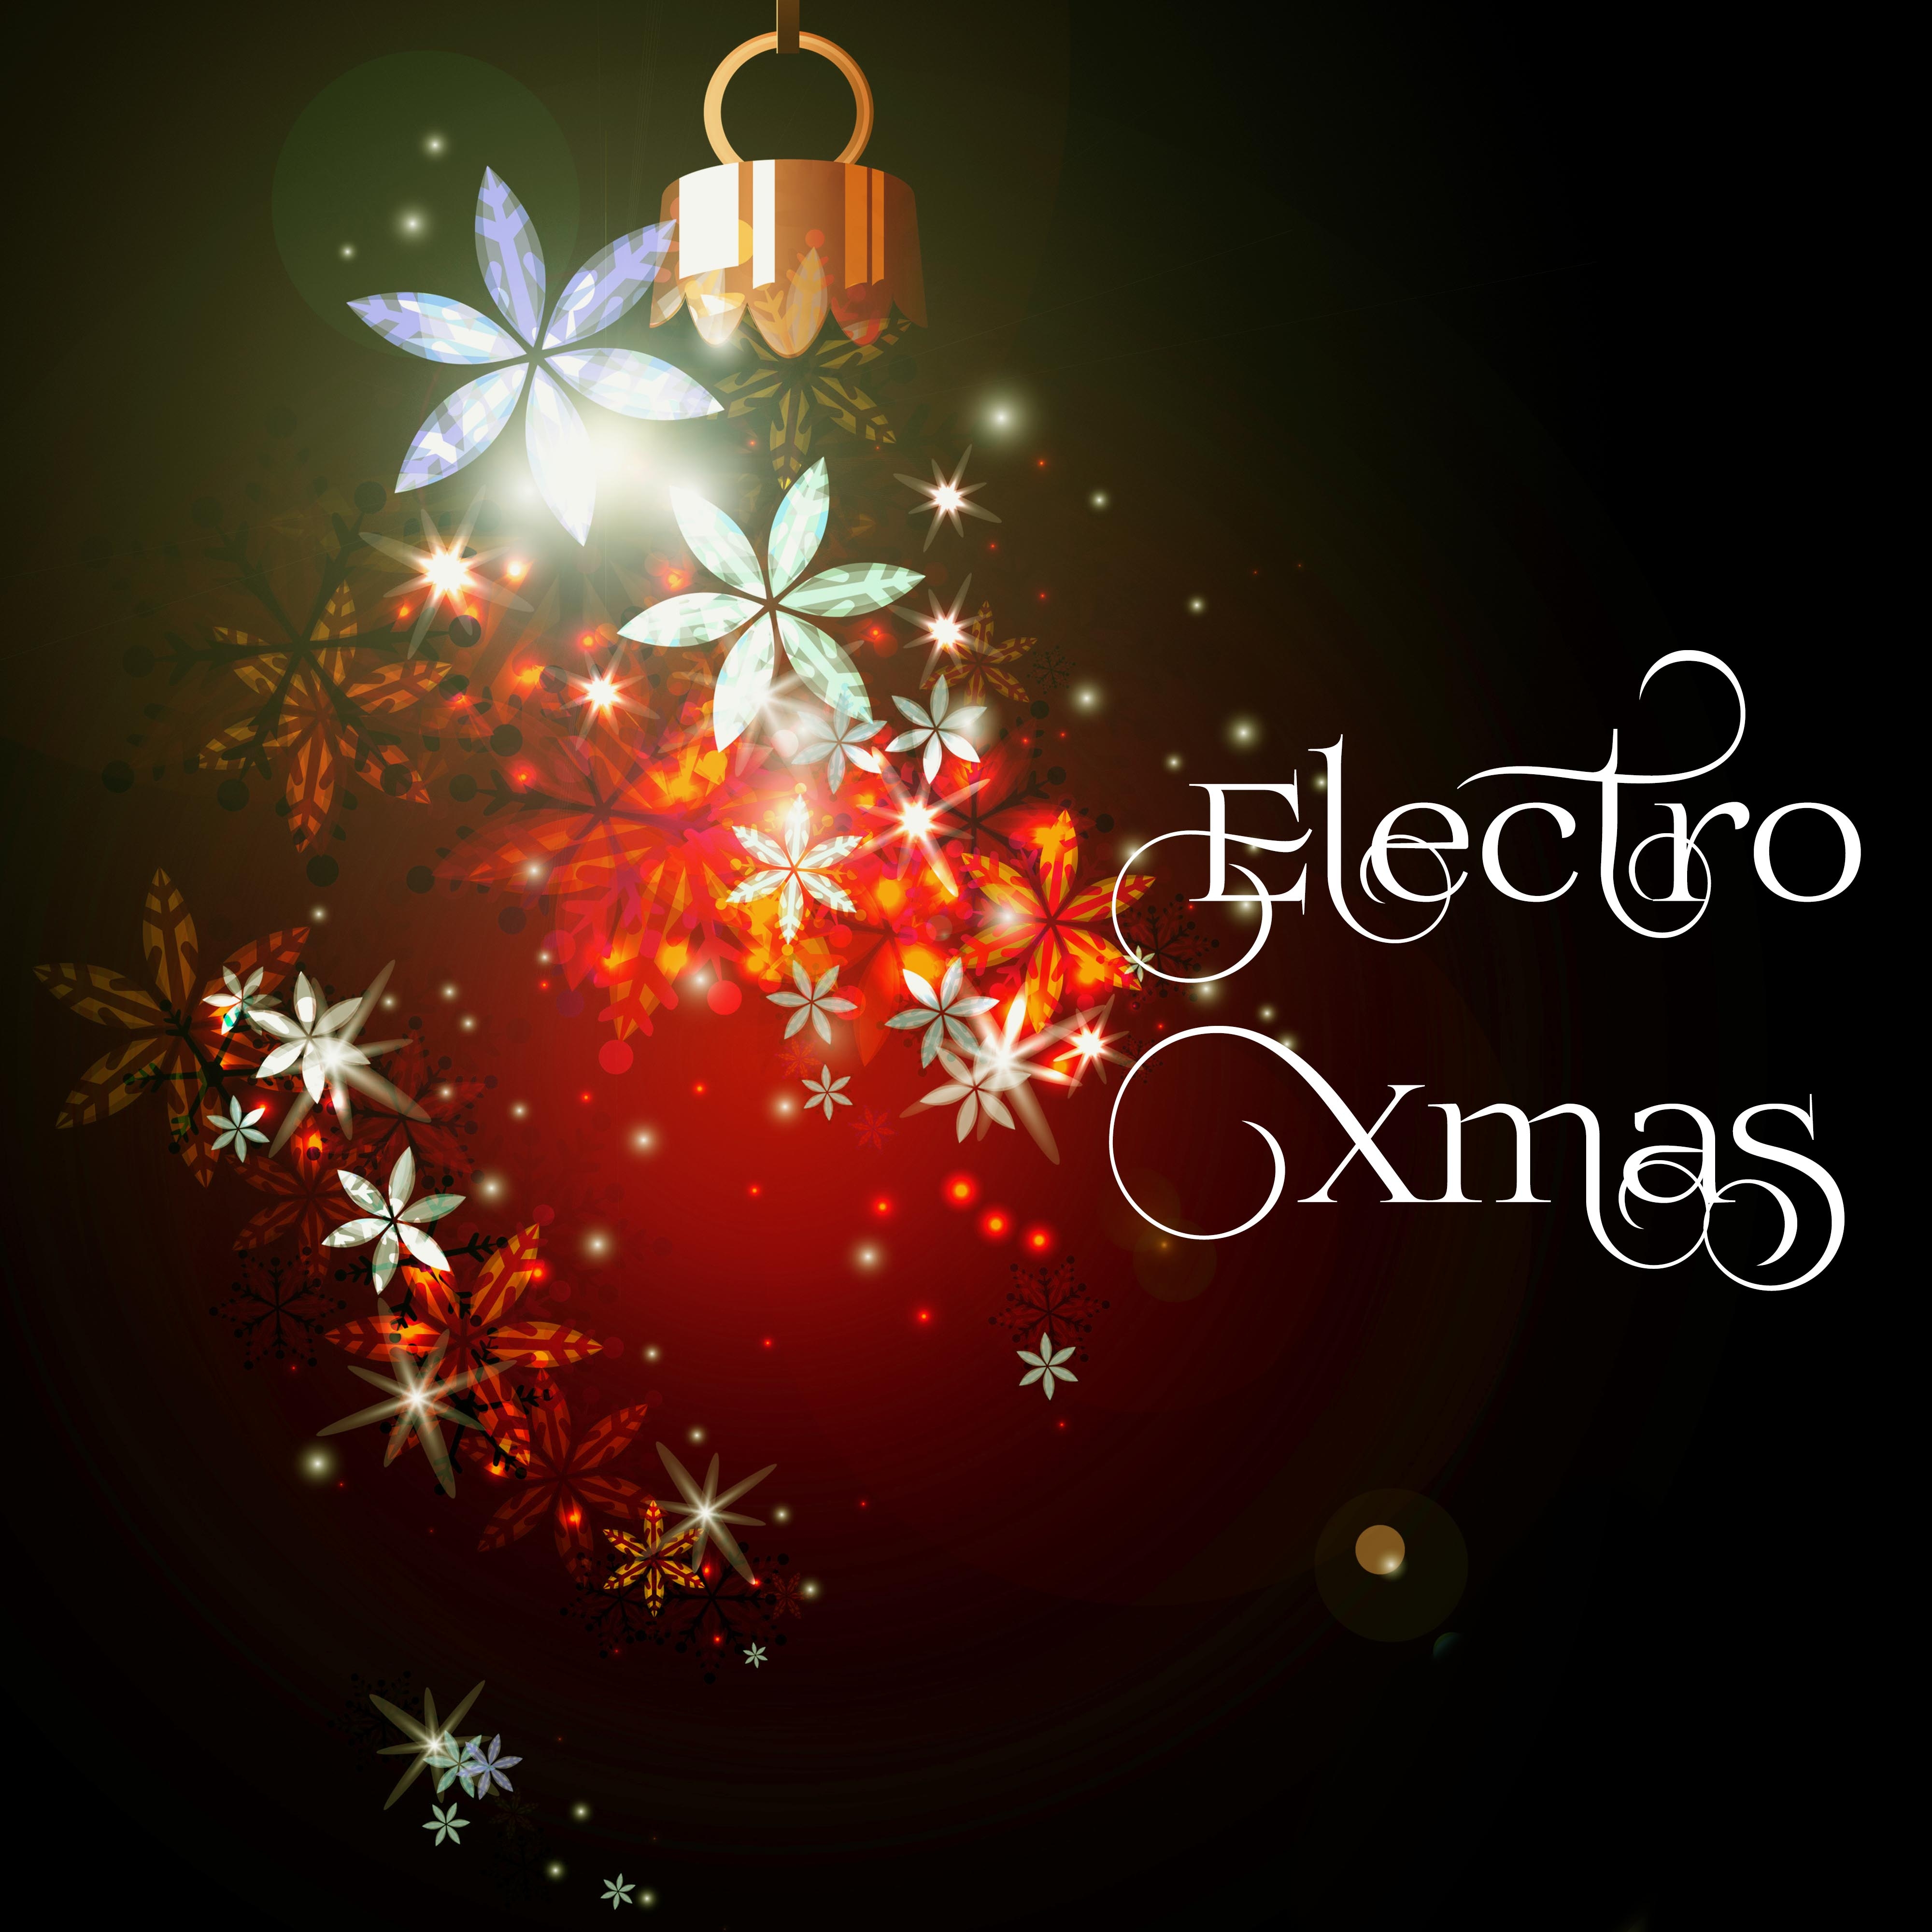 Electro Xmas - Hot Christmas Tracks for Christmas Holiday & New Year's Eve